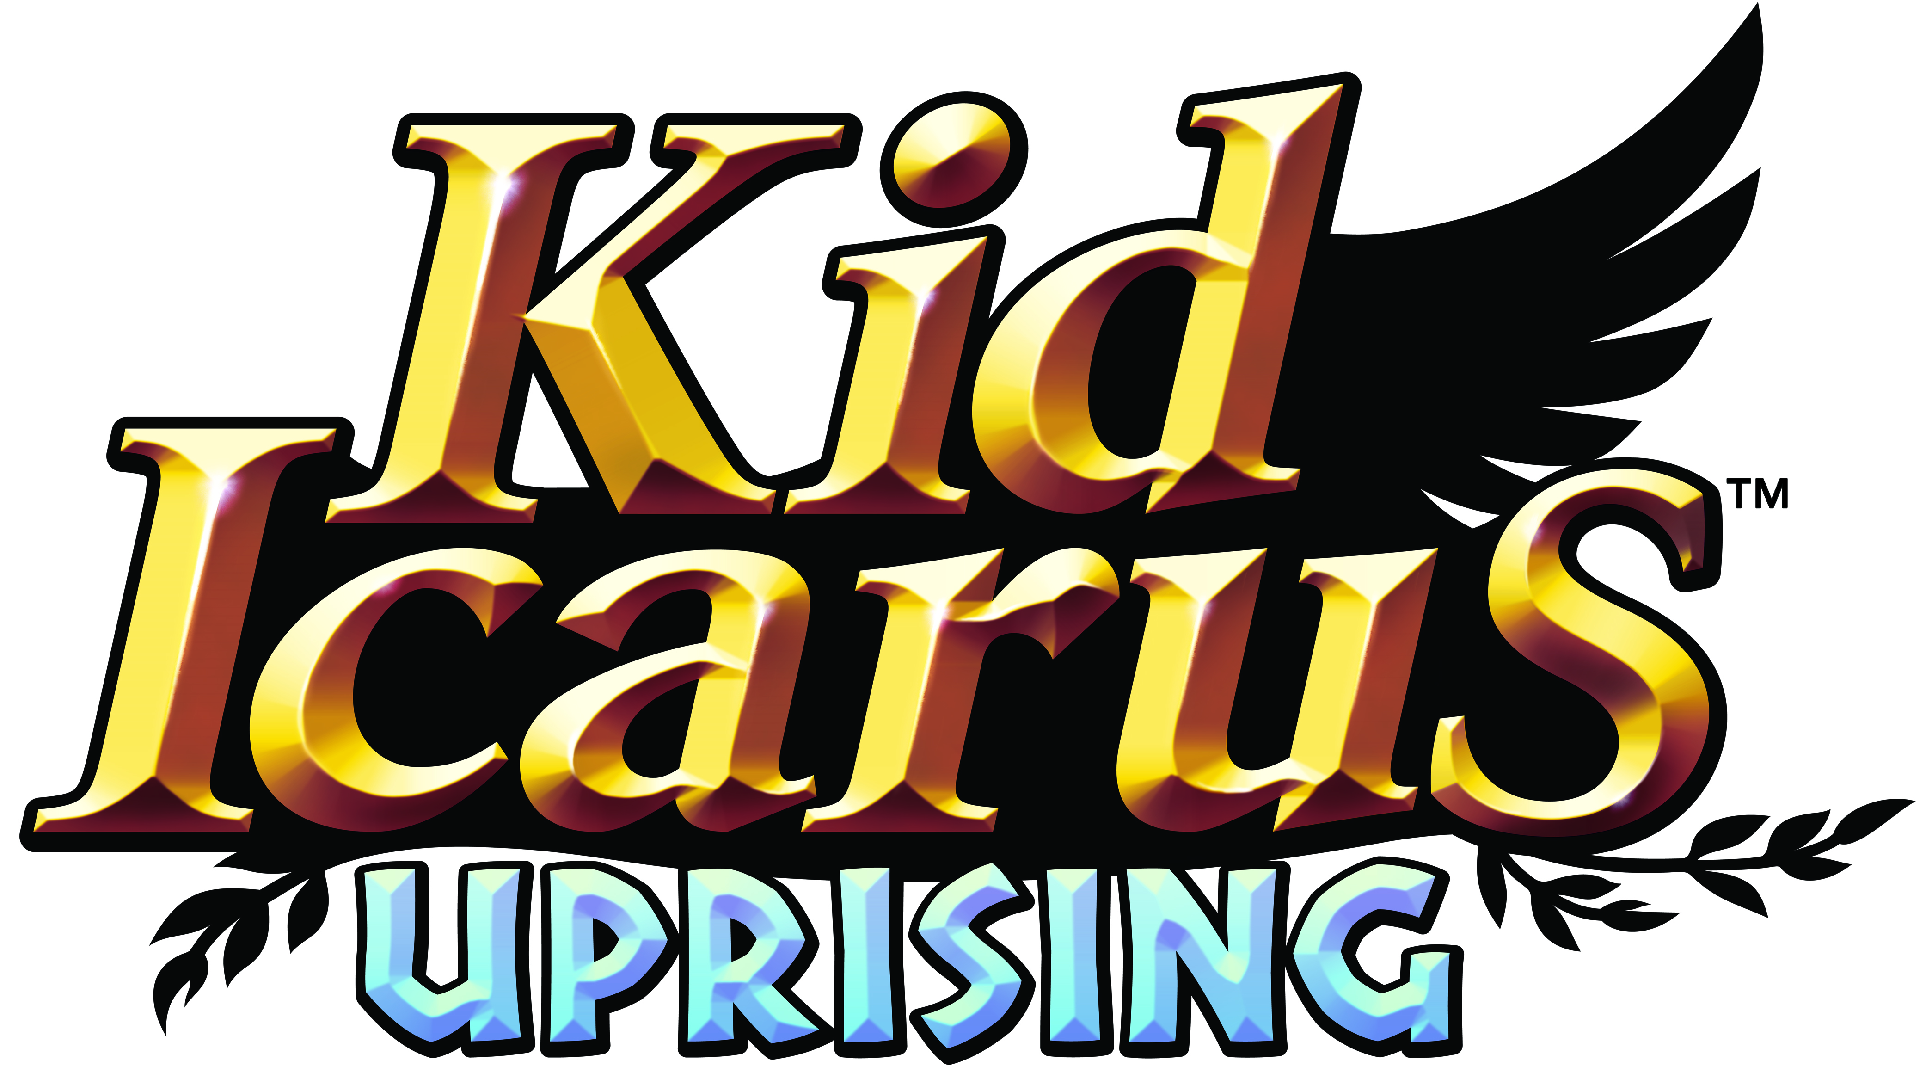 Kid Icarus: Uprising Logo